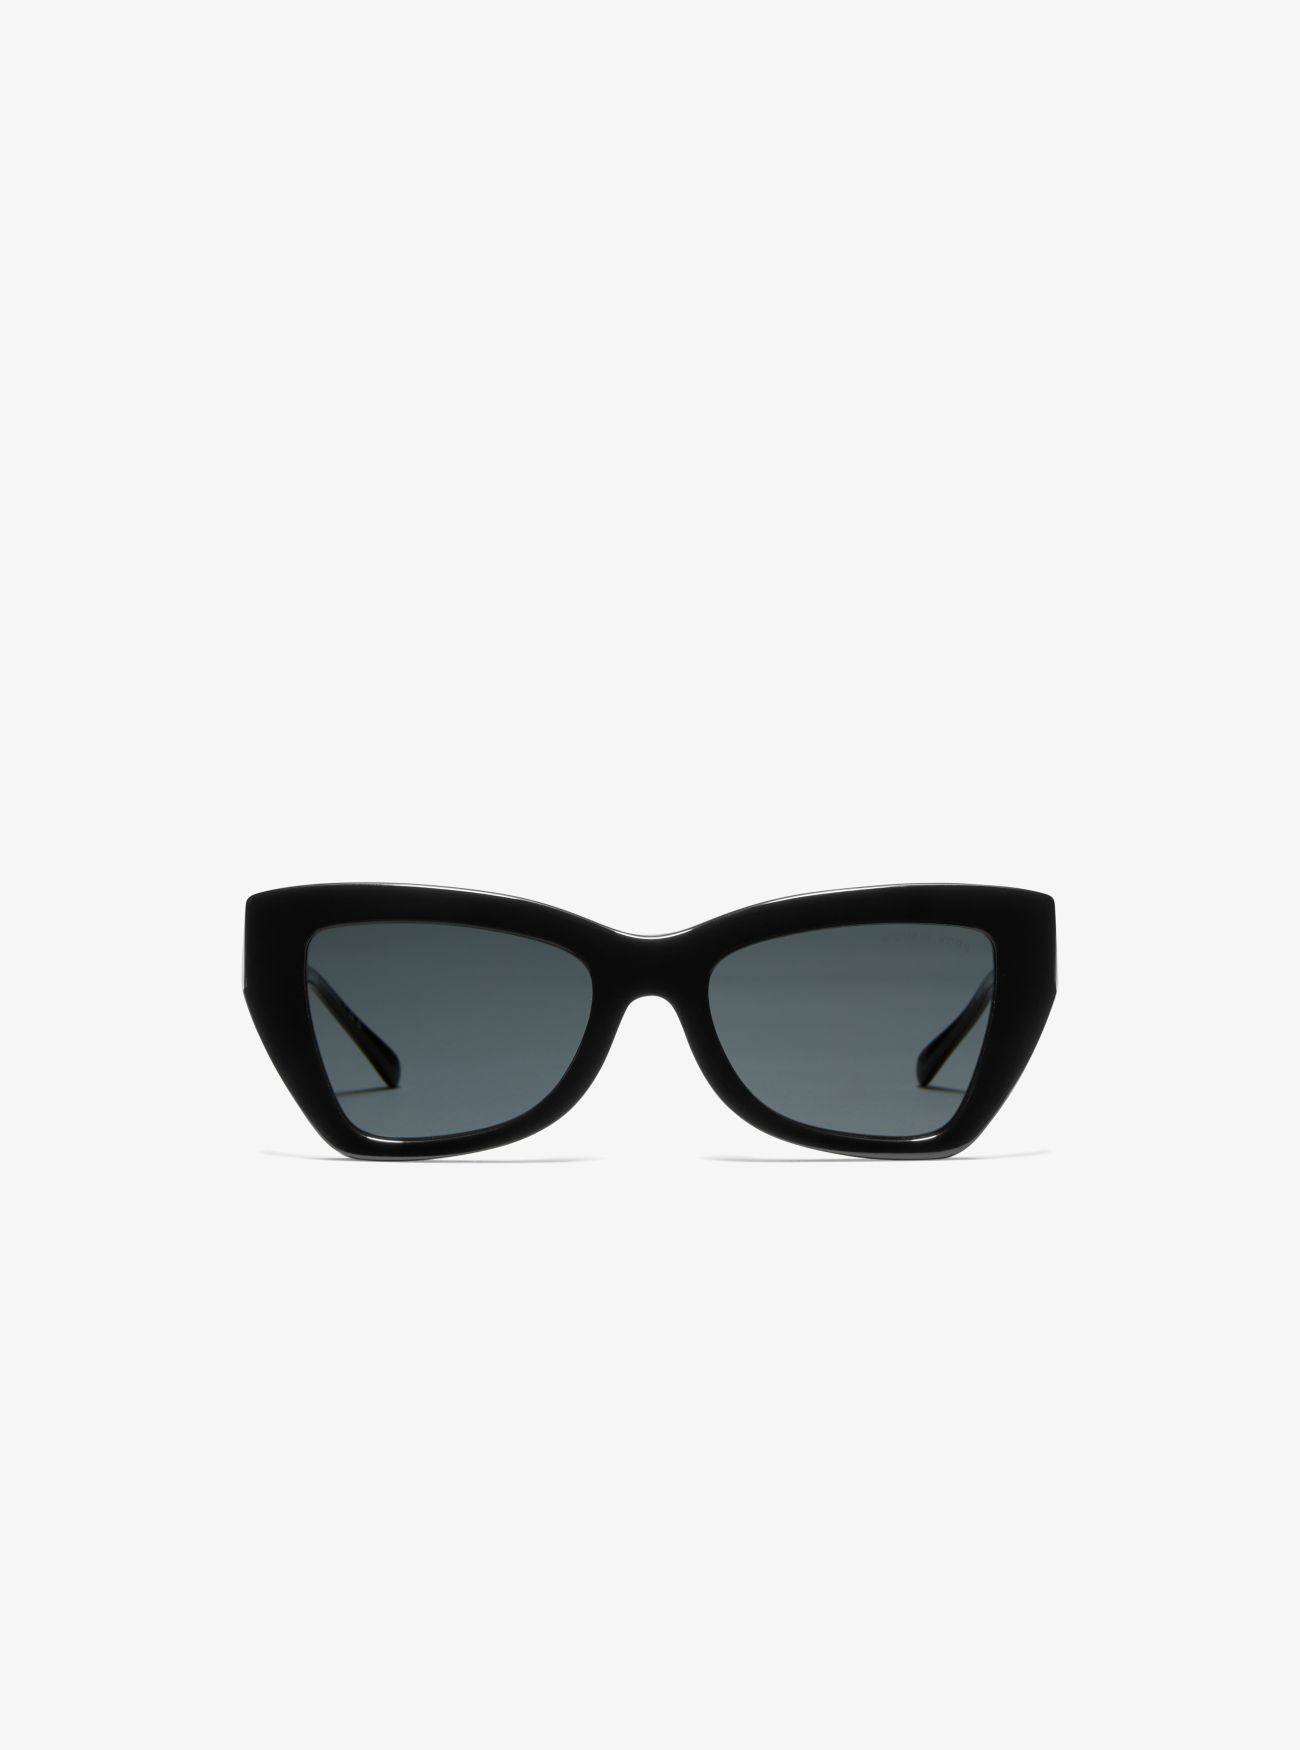 MK Montecito Sunglasses - Black - Michael Kors